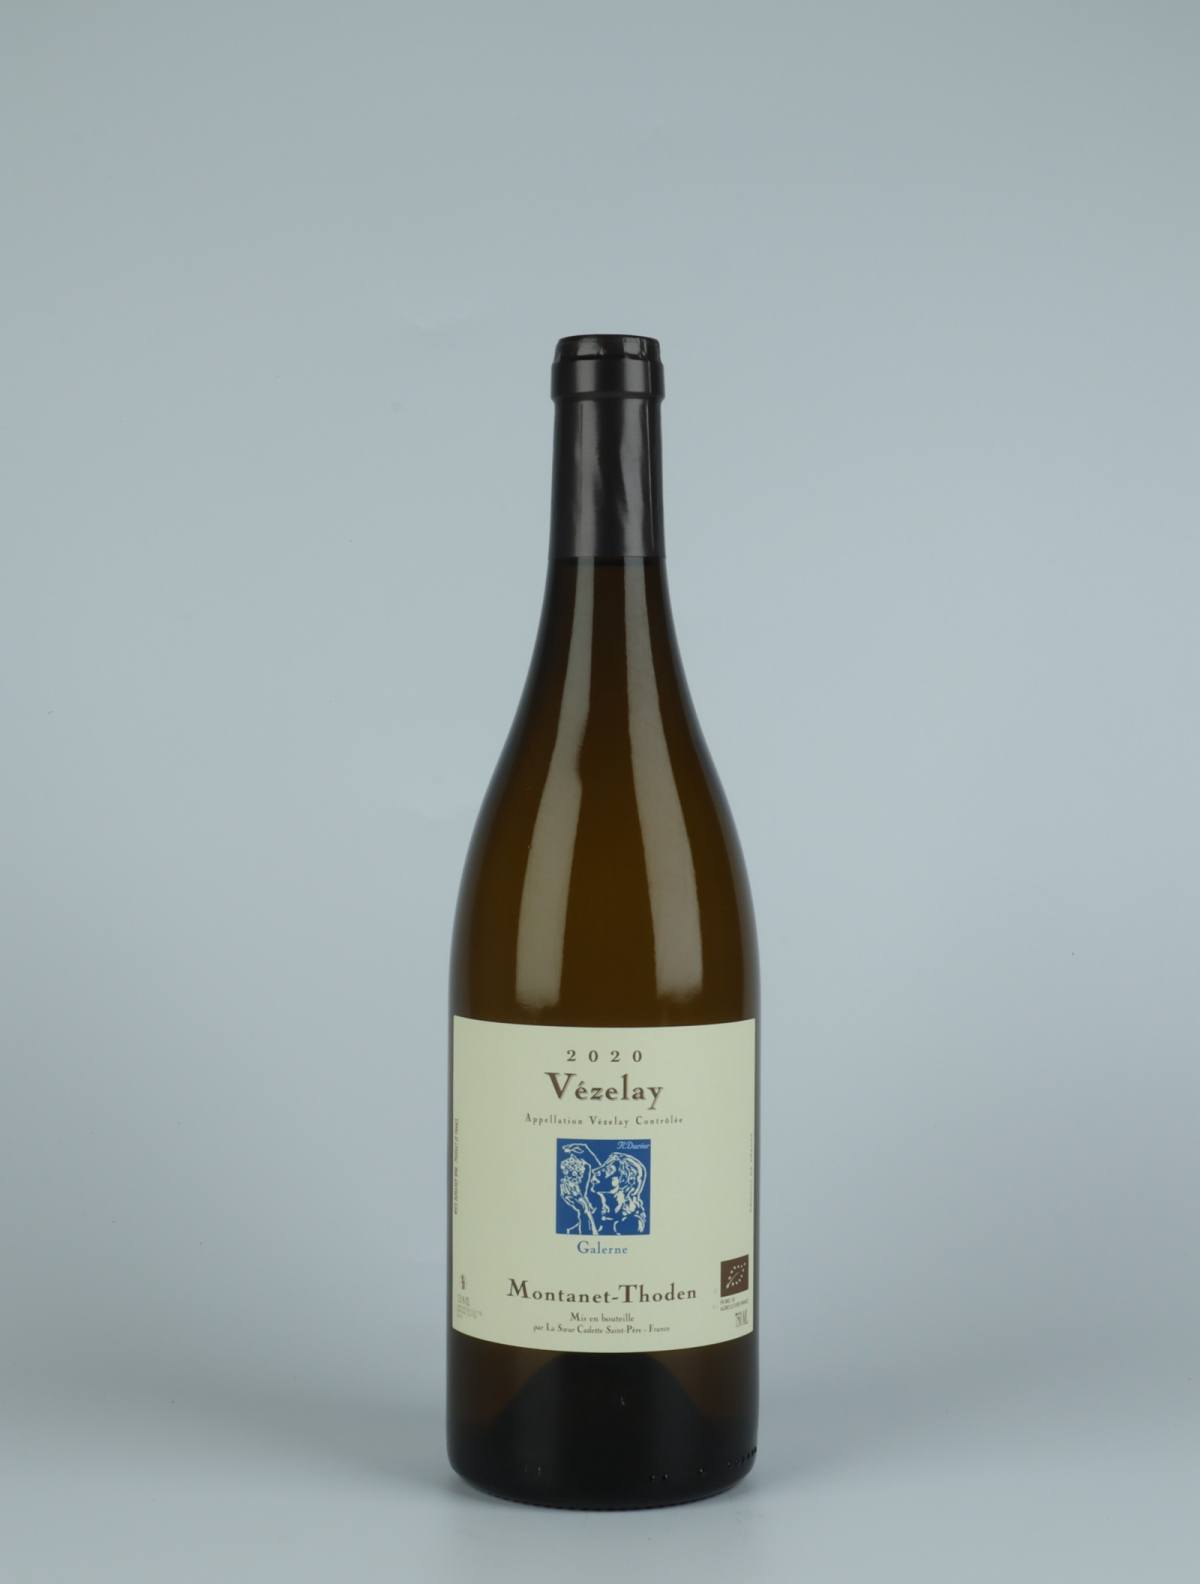 A bottle 2020 Bourgogne Vézelay - Galerne White wine from Domaine Montanet-Thoden, Burgundy in France